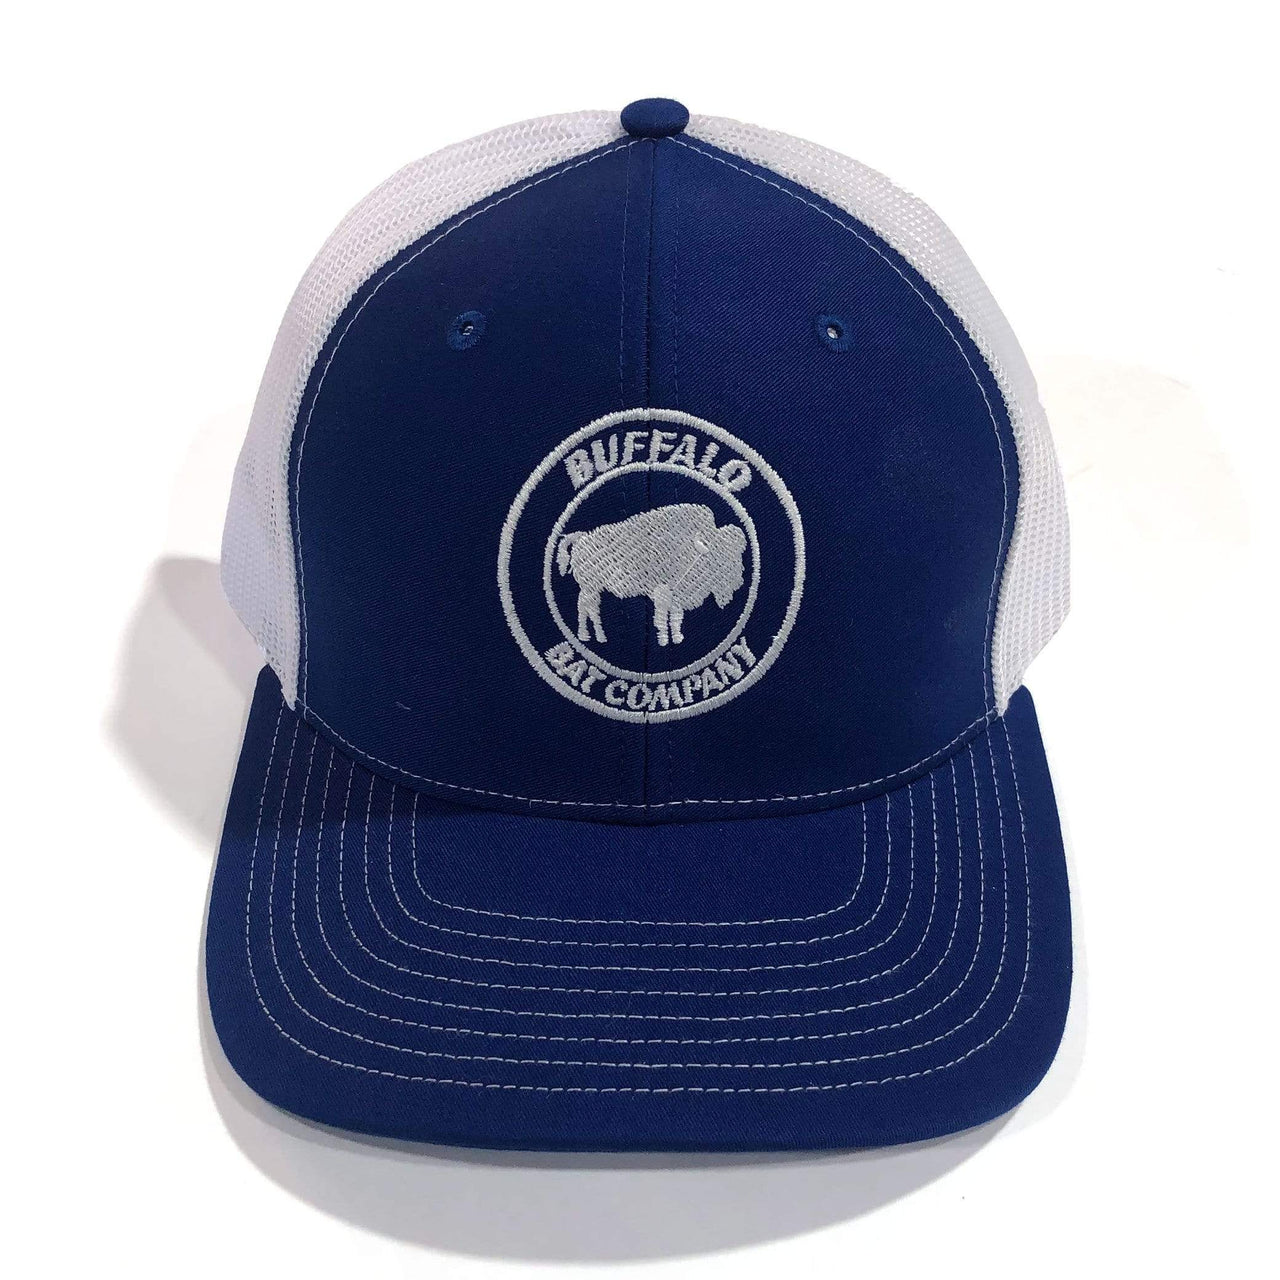 Buffalo Bat Co Apparel Royal Blue | White Buffalo Bat Co. Trucker Hat